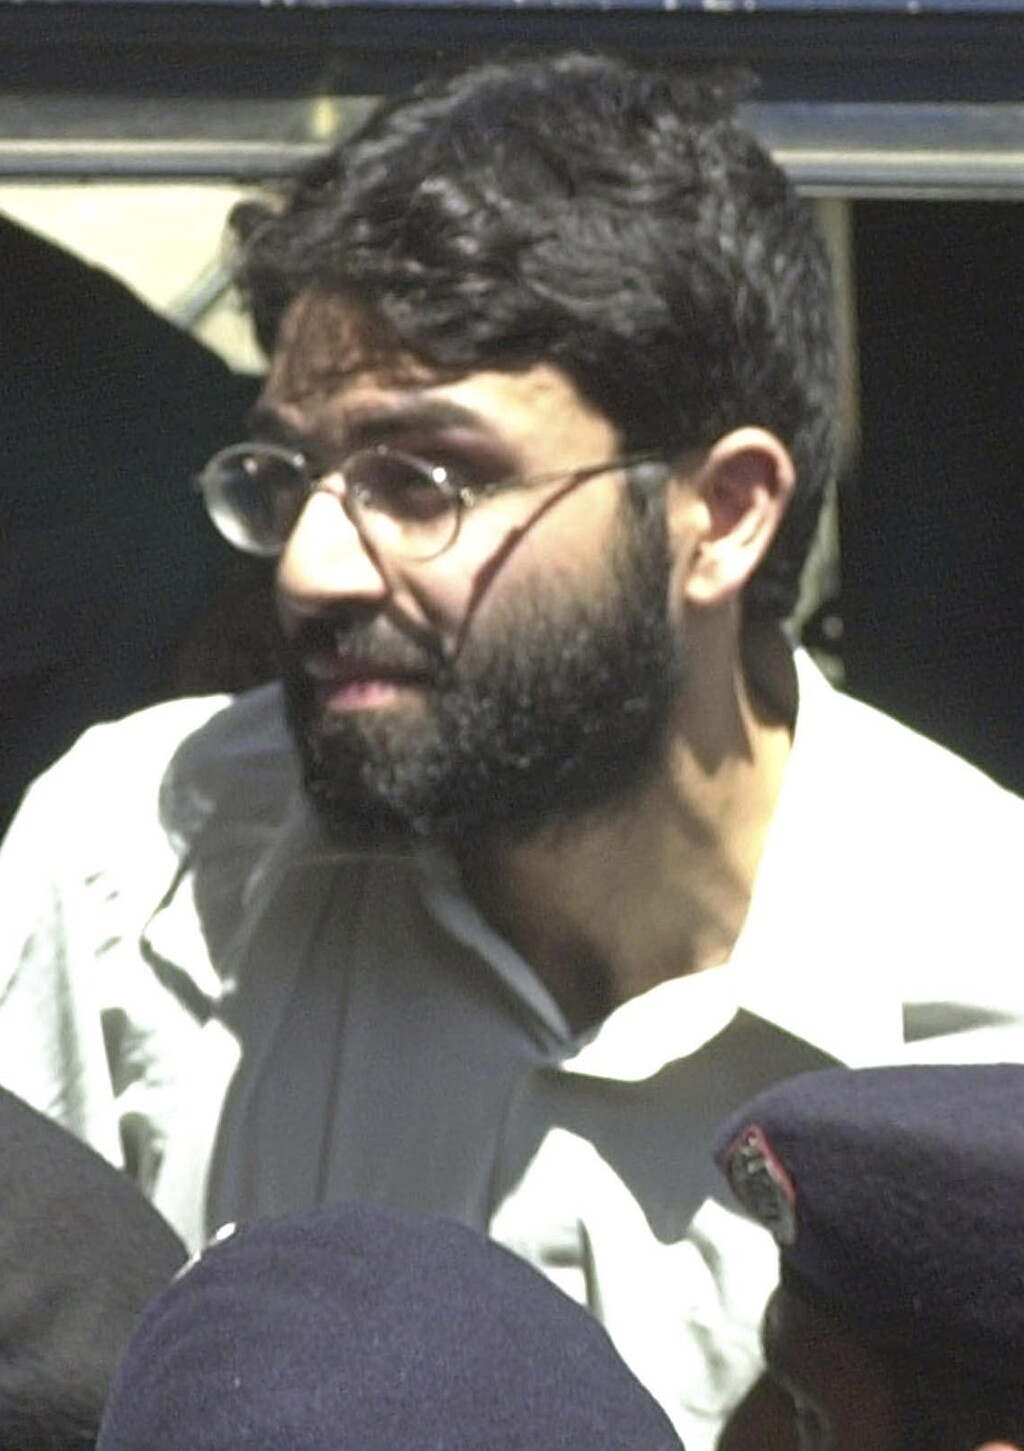 Ahmed Omar Saeed Sheikh mastermind behind the murder of Daniel Pearl